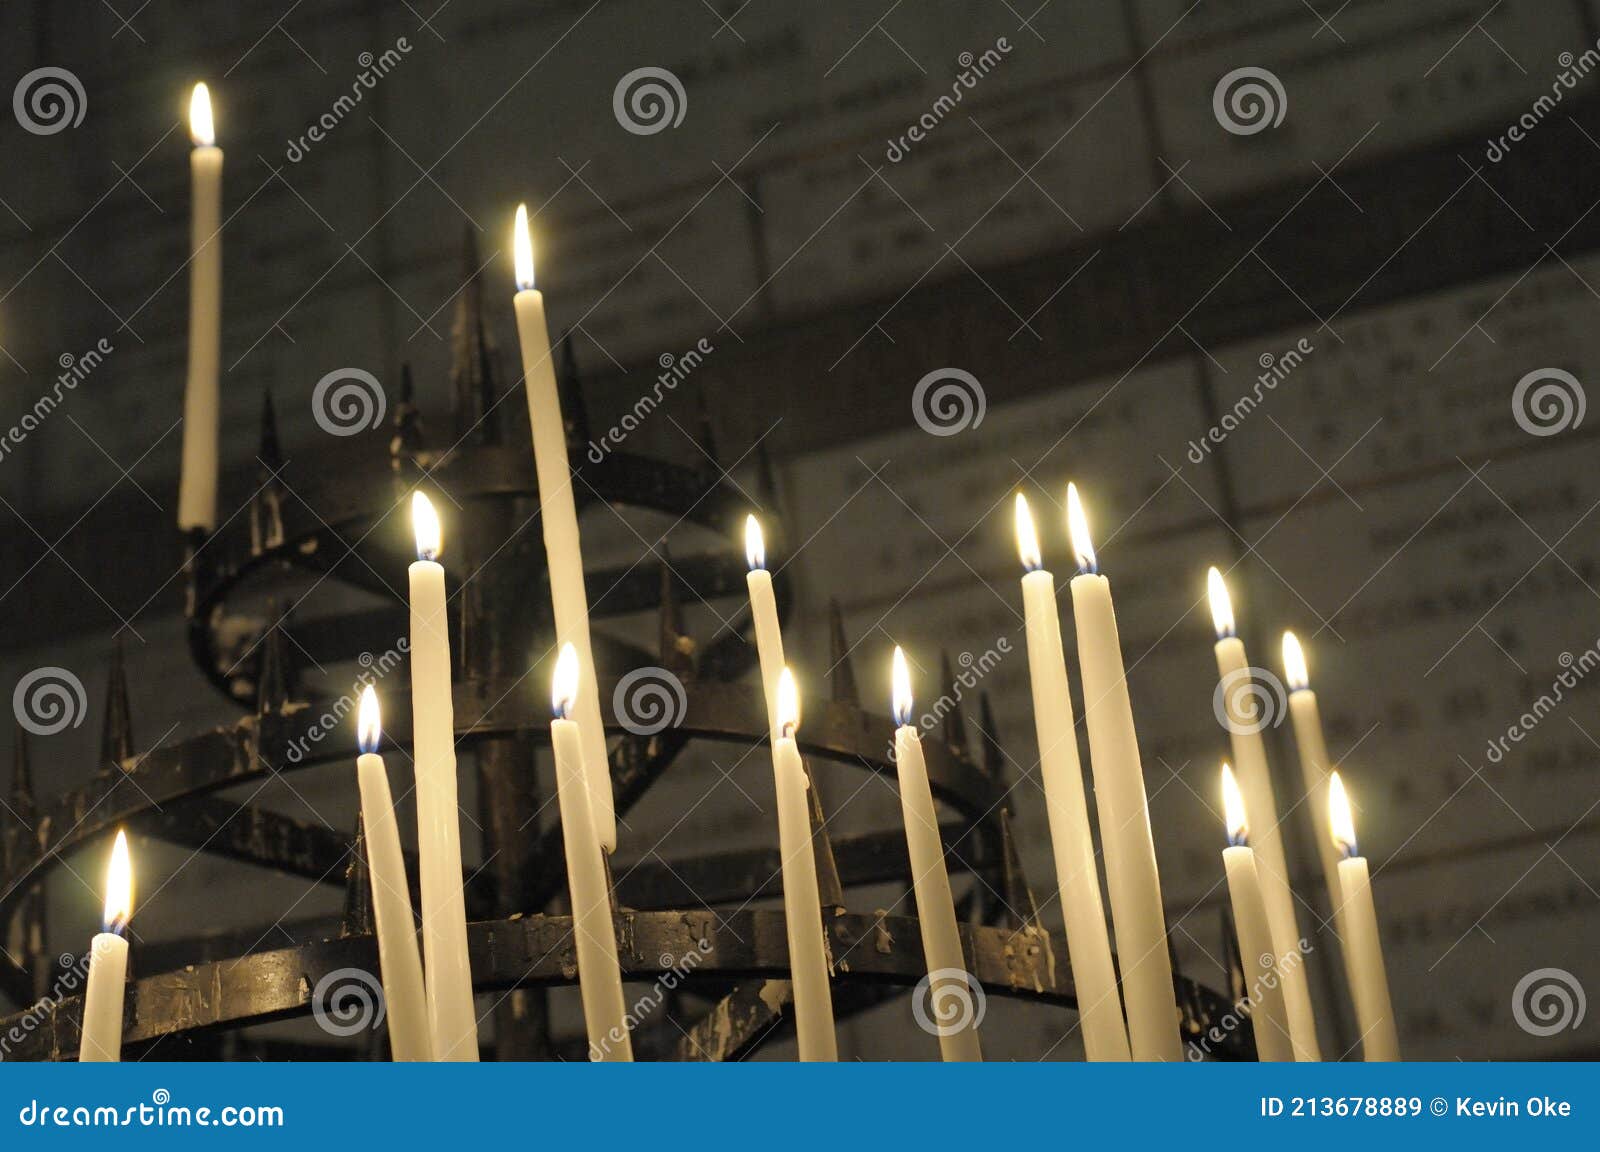 volare candles, basilica notre-dame de fourviere, lyon